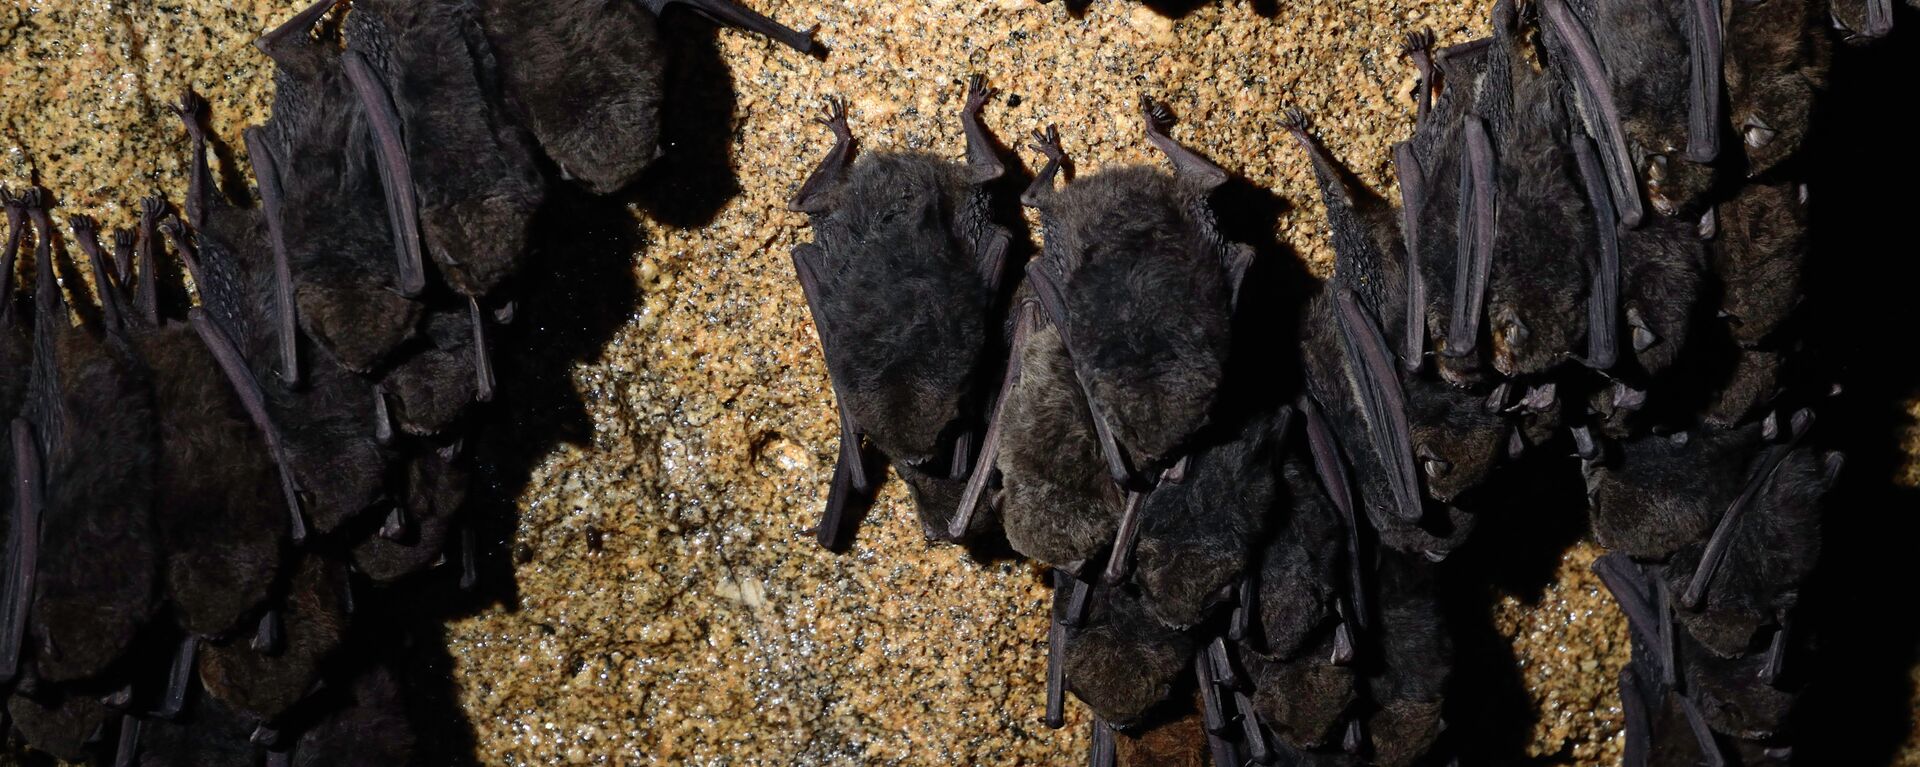 Colony of schreiber's long-fingered bat (Mammalia: Chiroptera: Vespertilionidae: Miniopterus schreibersii) in Gobholo Cave.` - Sputnik International, 1920, 20.09.2021